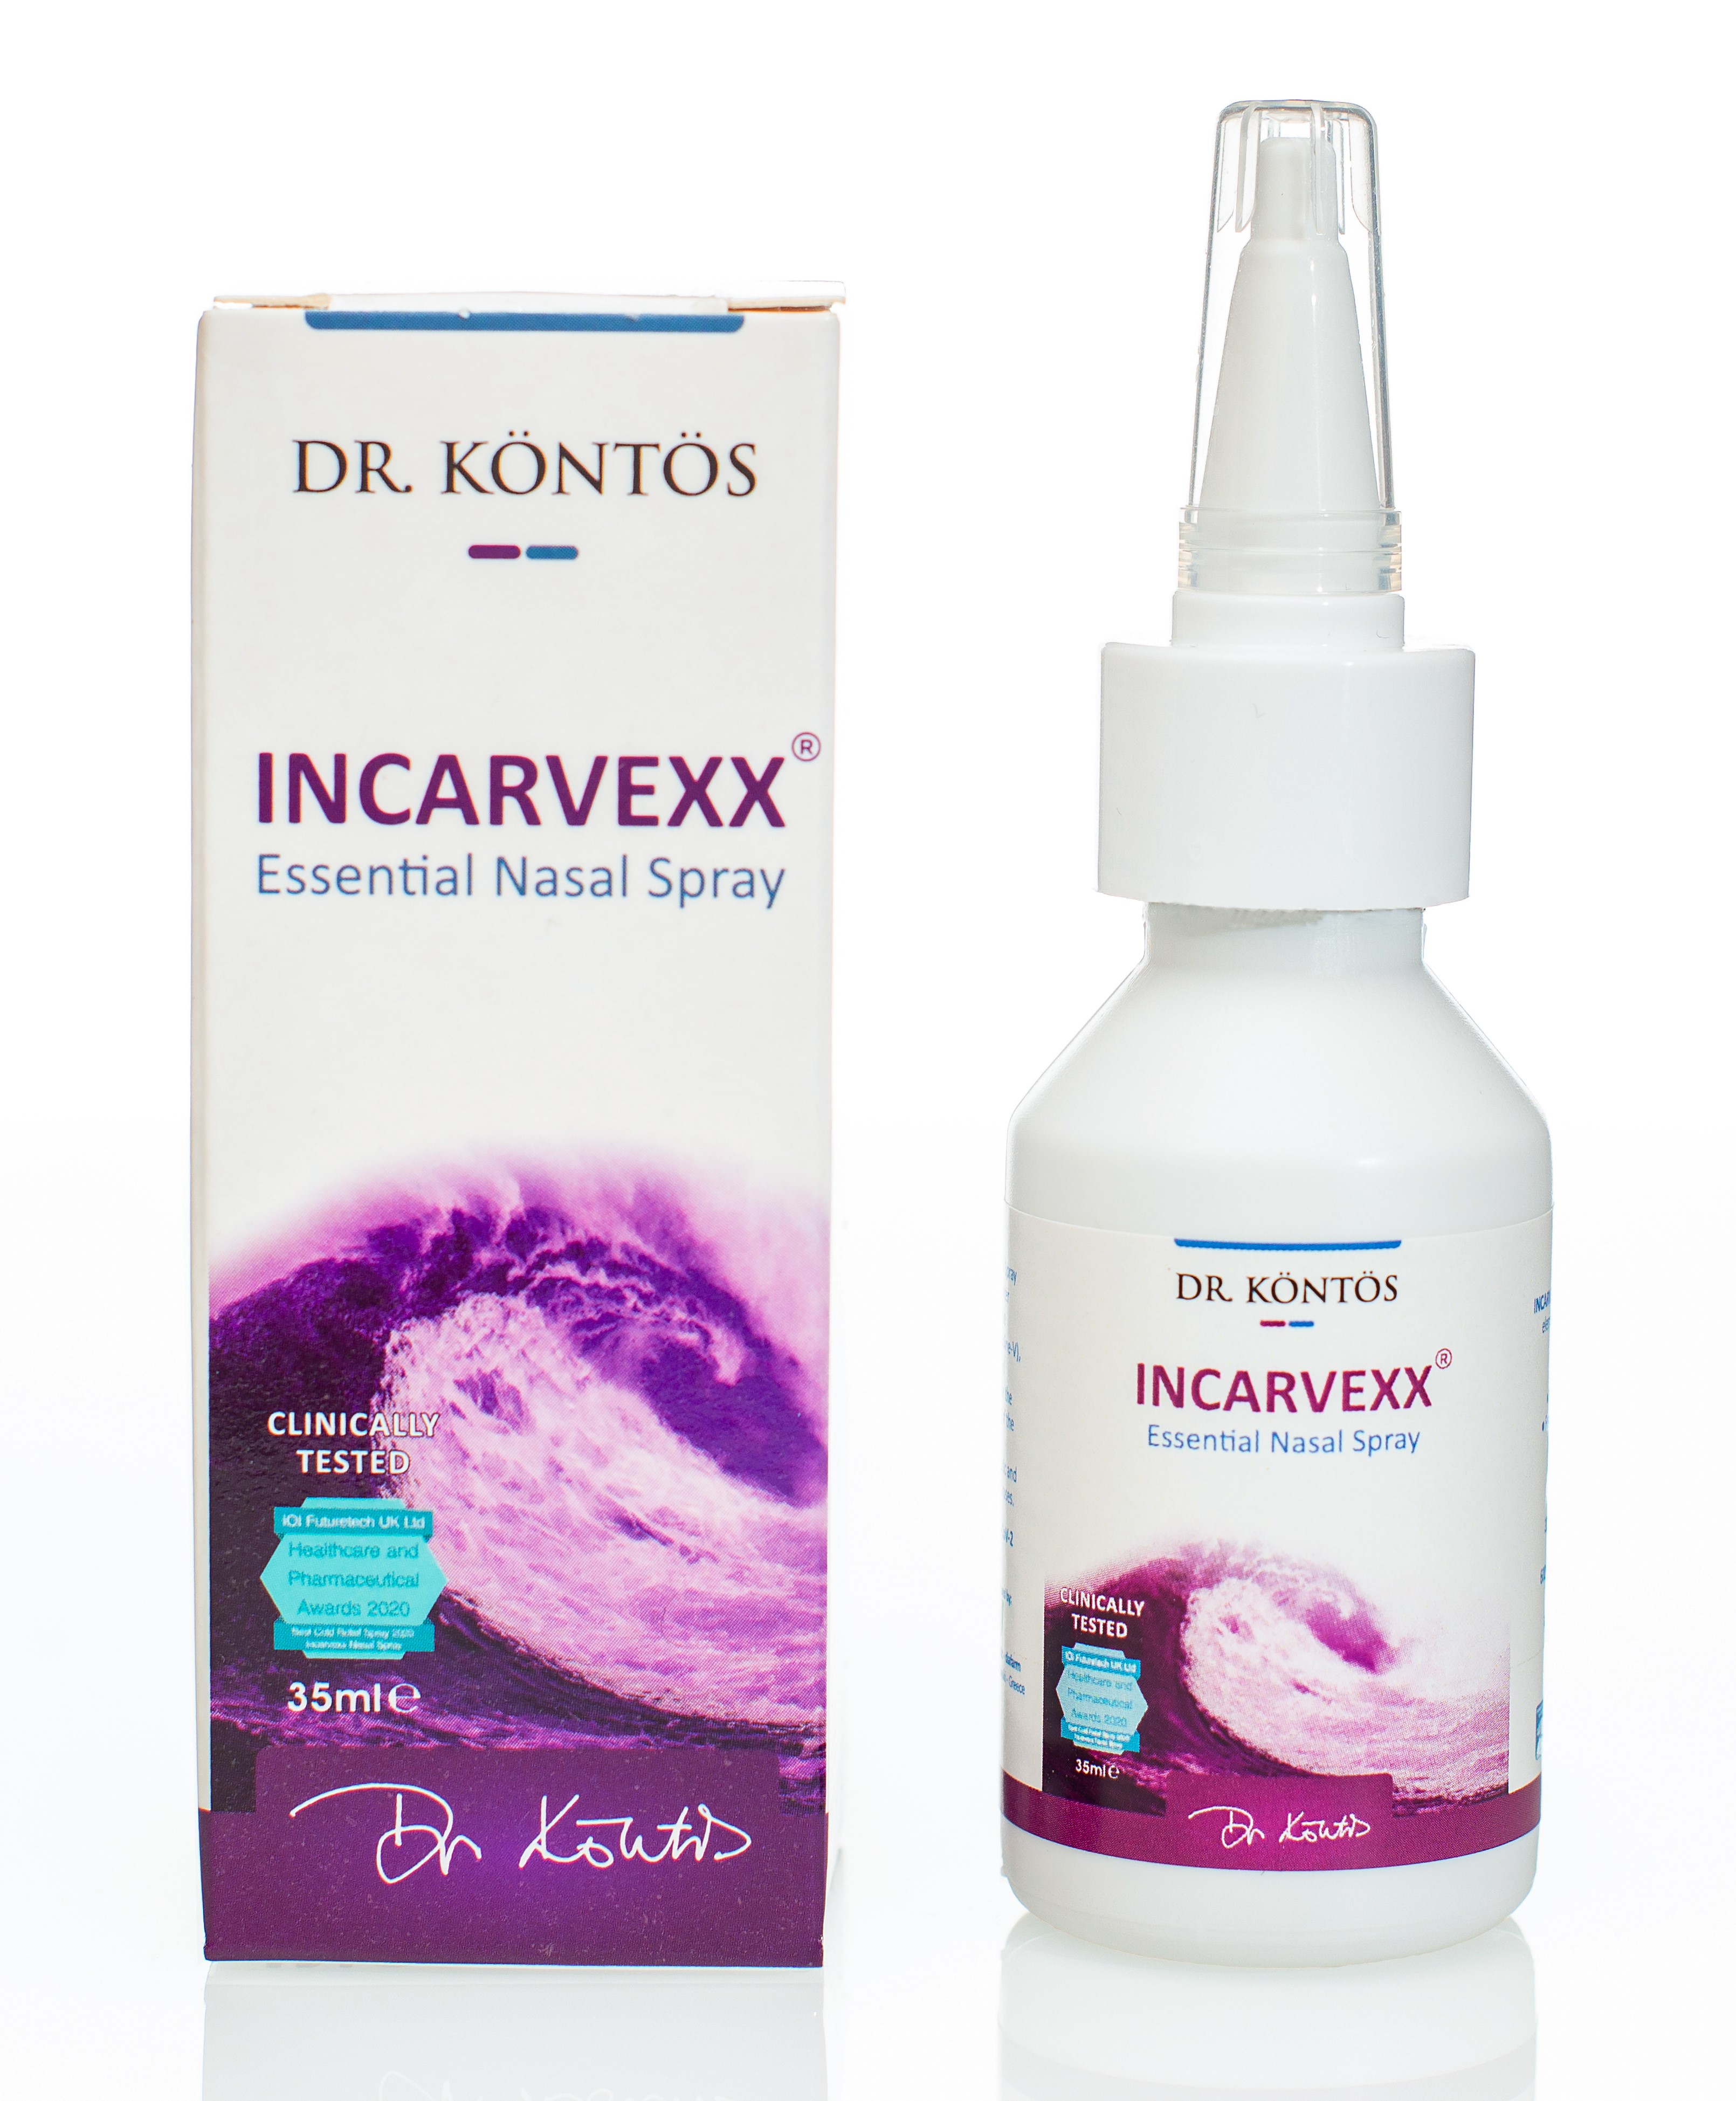 Dr. Kontos' Incarvexx Essential Nasal Spray 